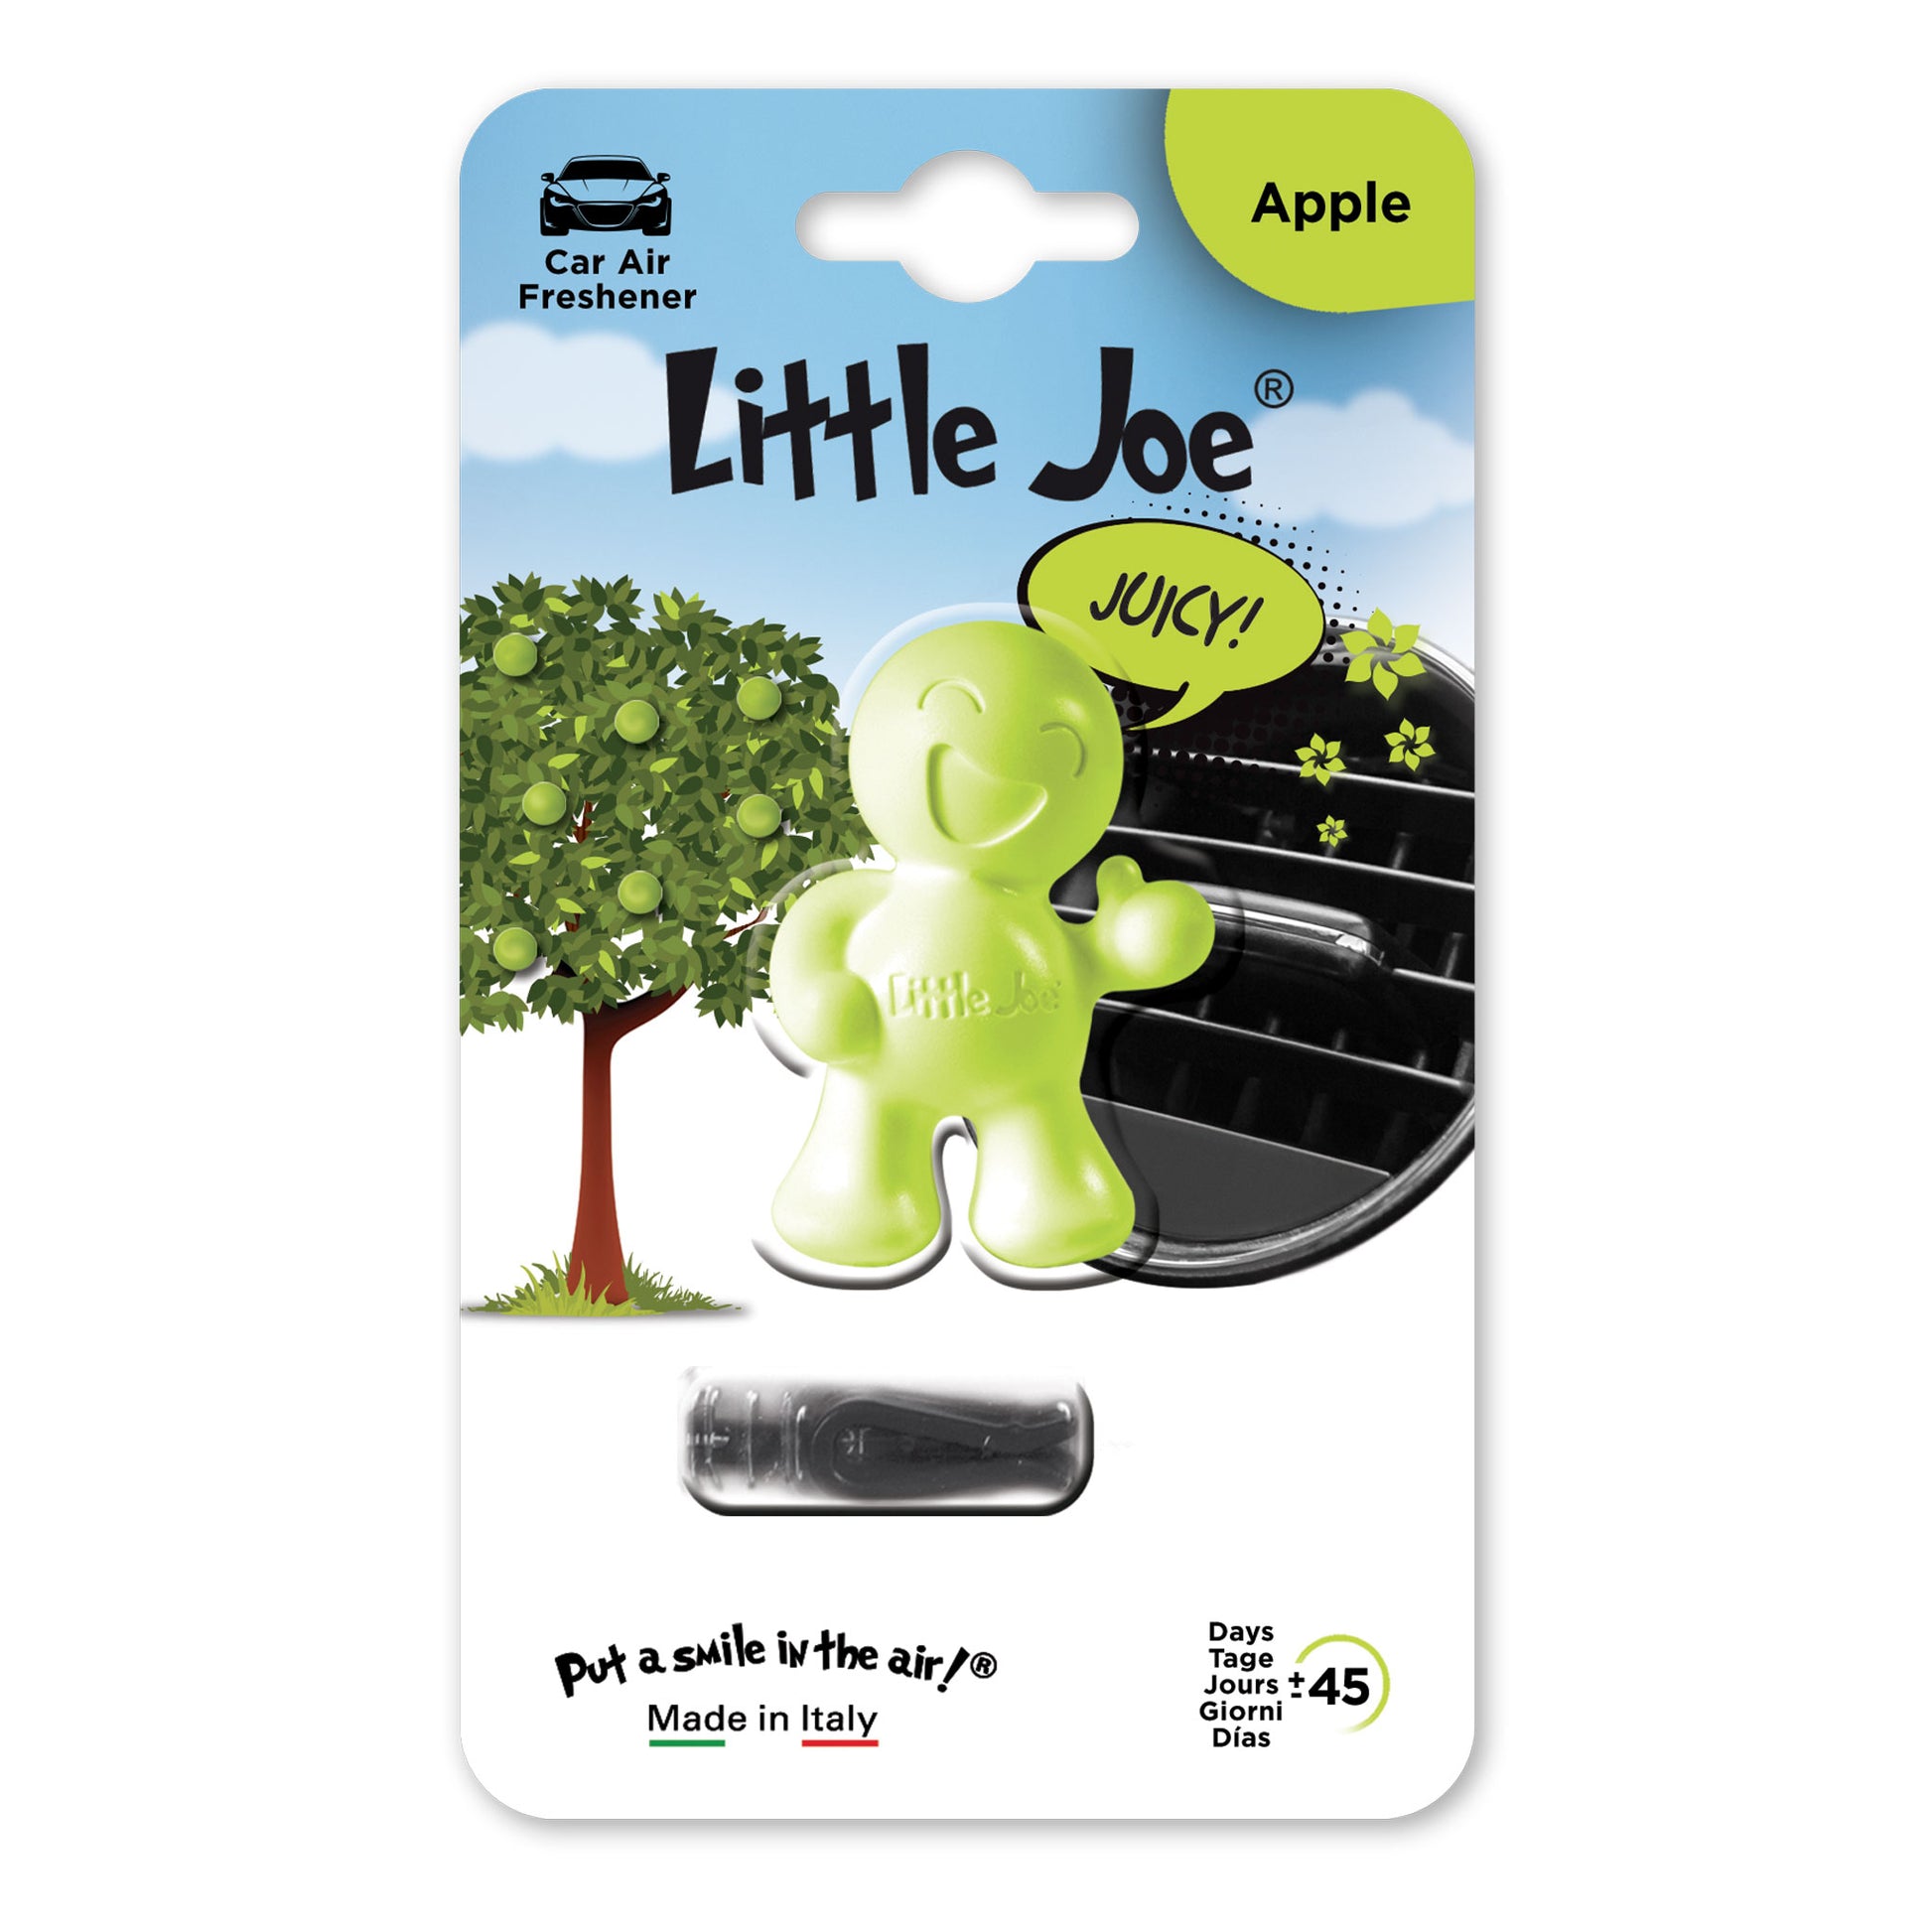 Little Joe Air Freshener - USA - New Car – Stoner Car Care